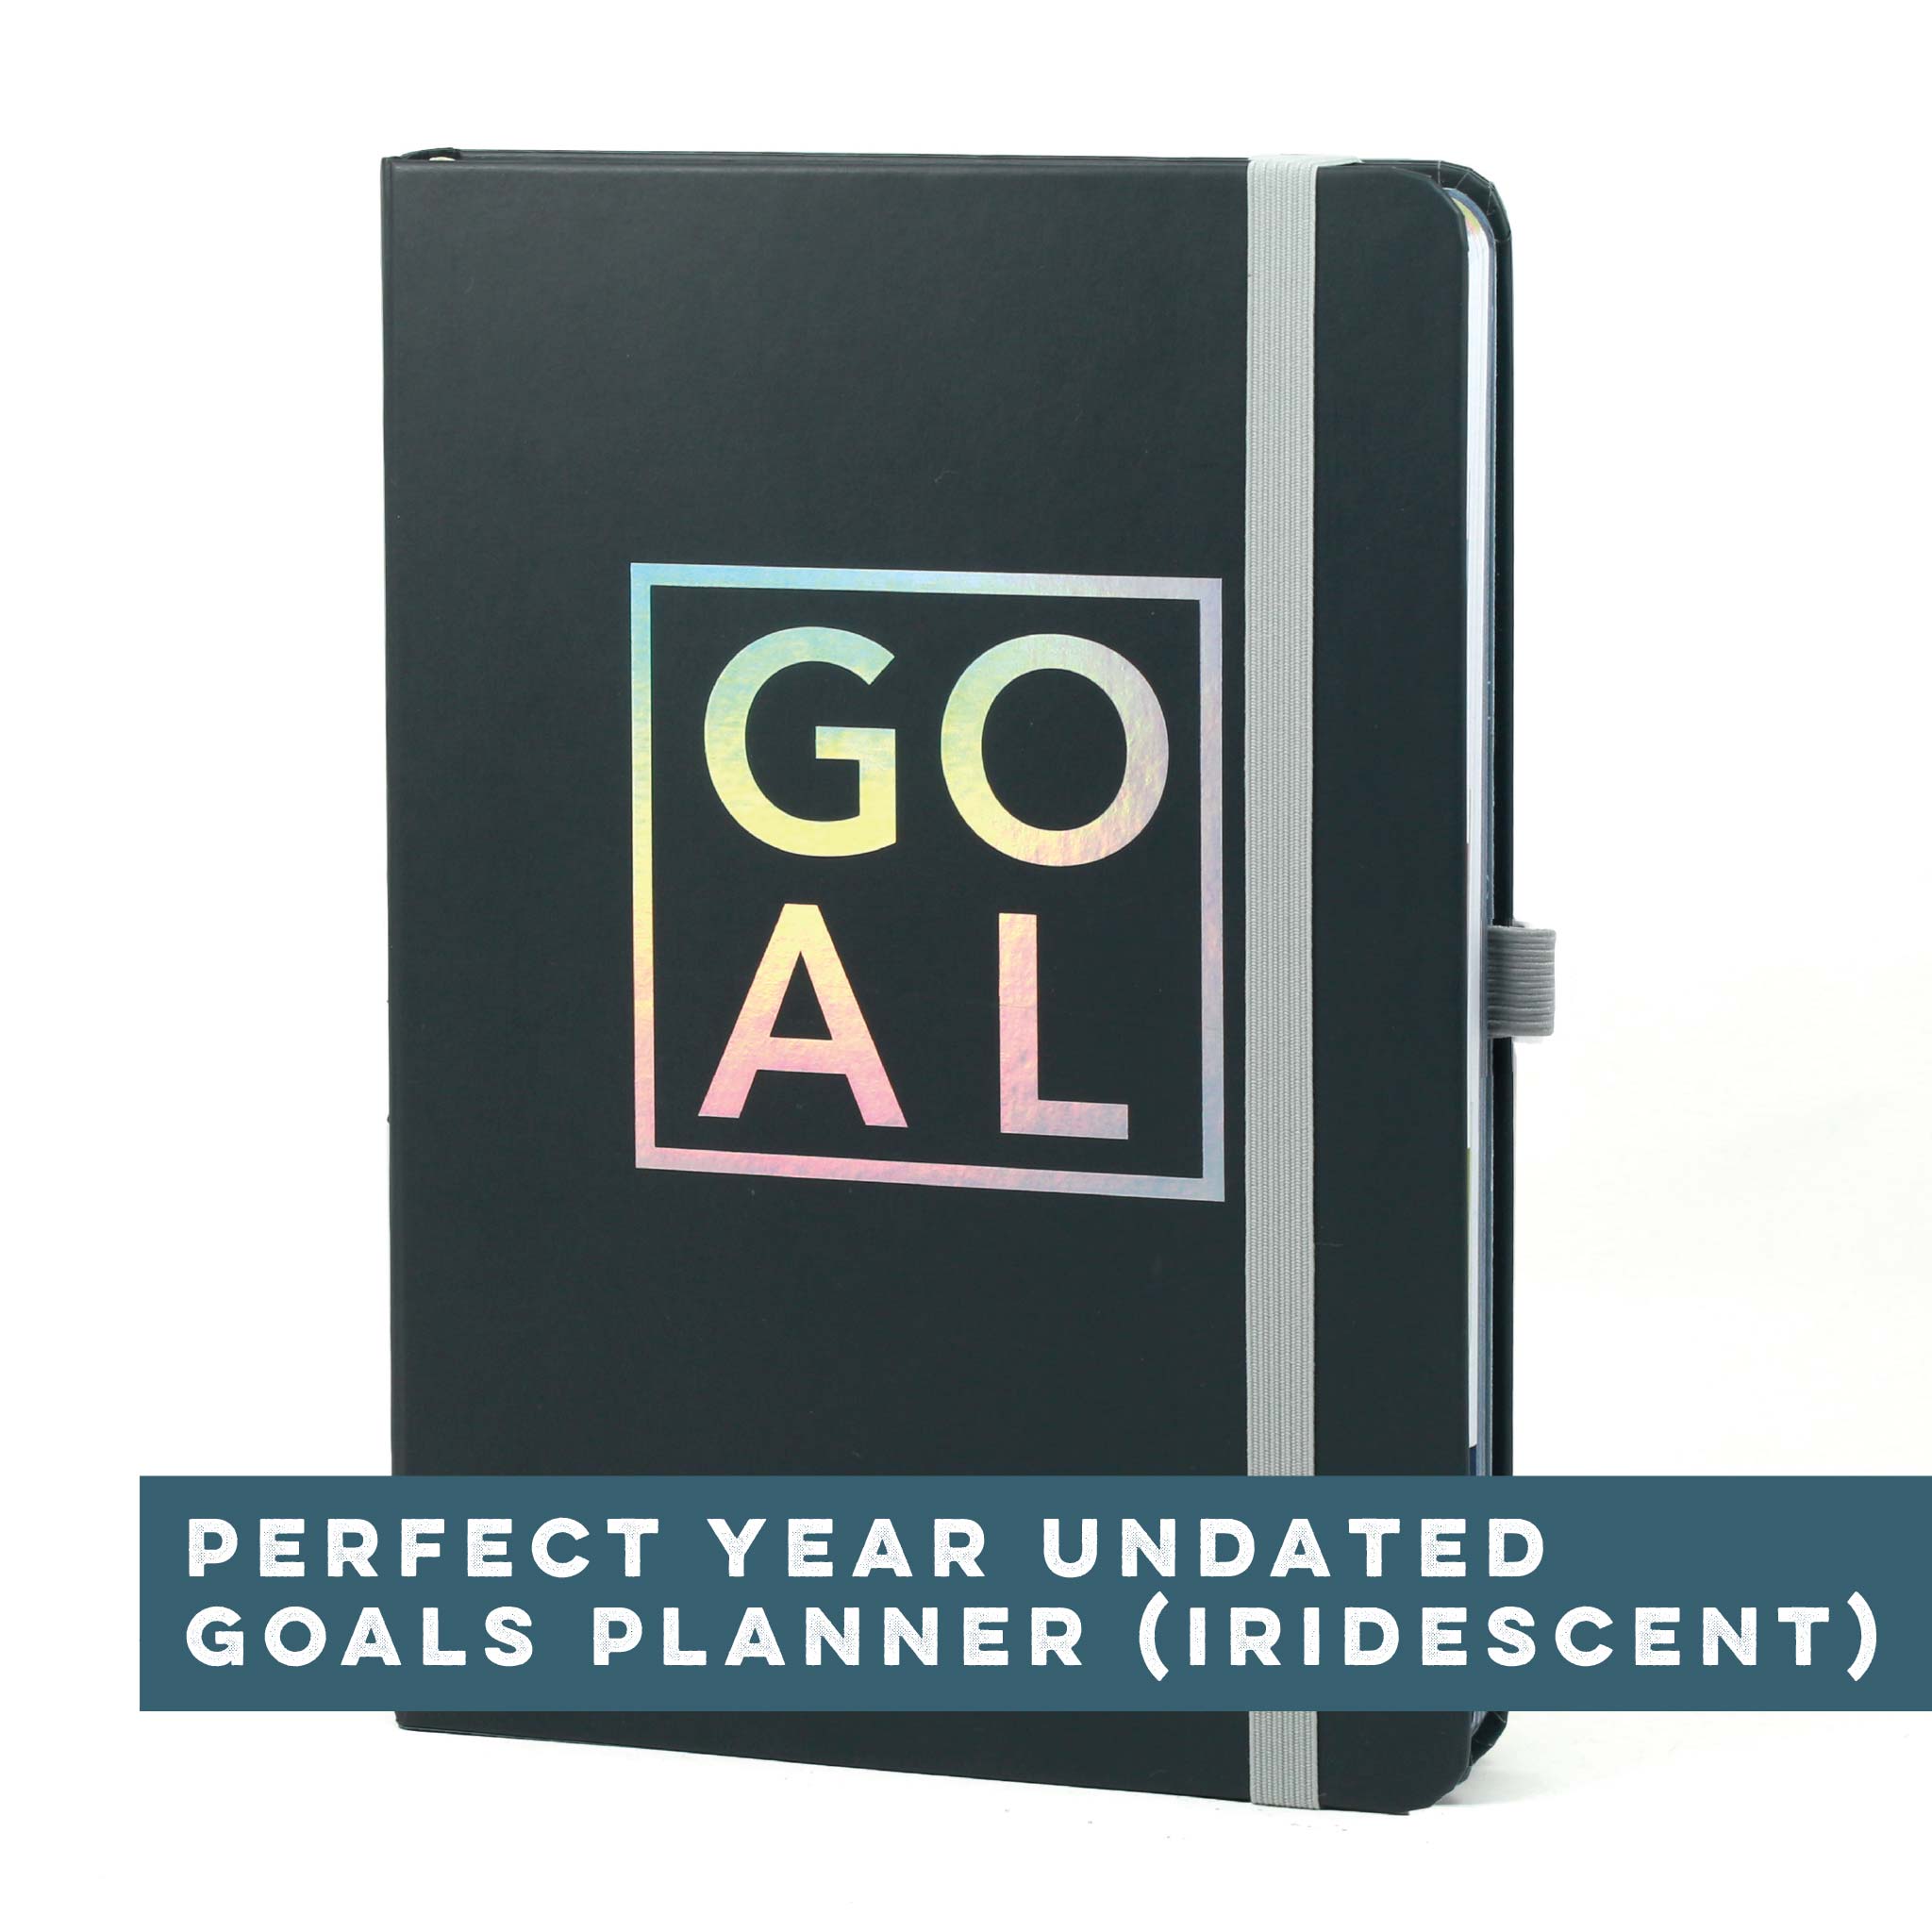 Perfect Year Undated Goals Planner (Iridescent)